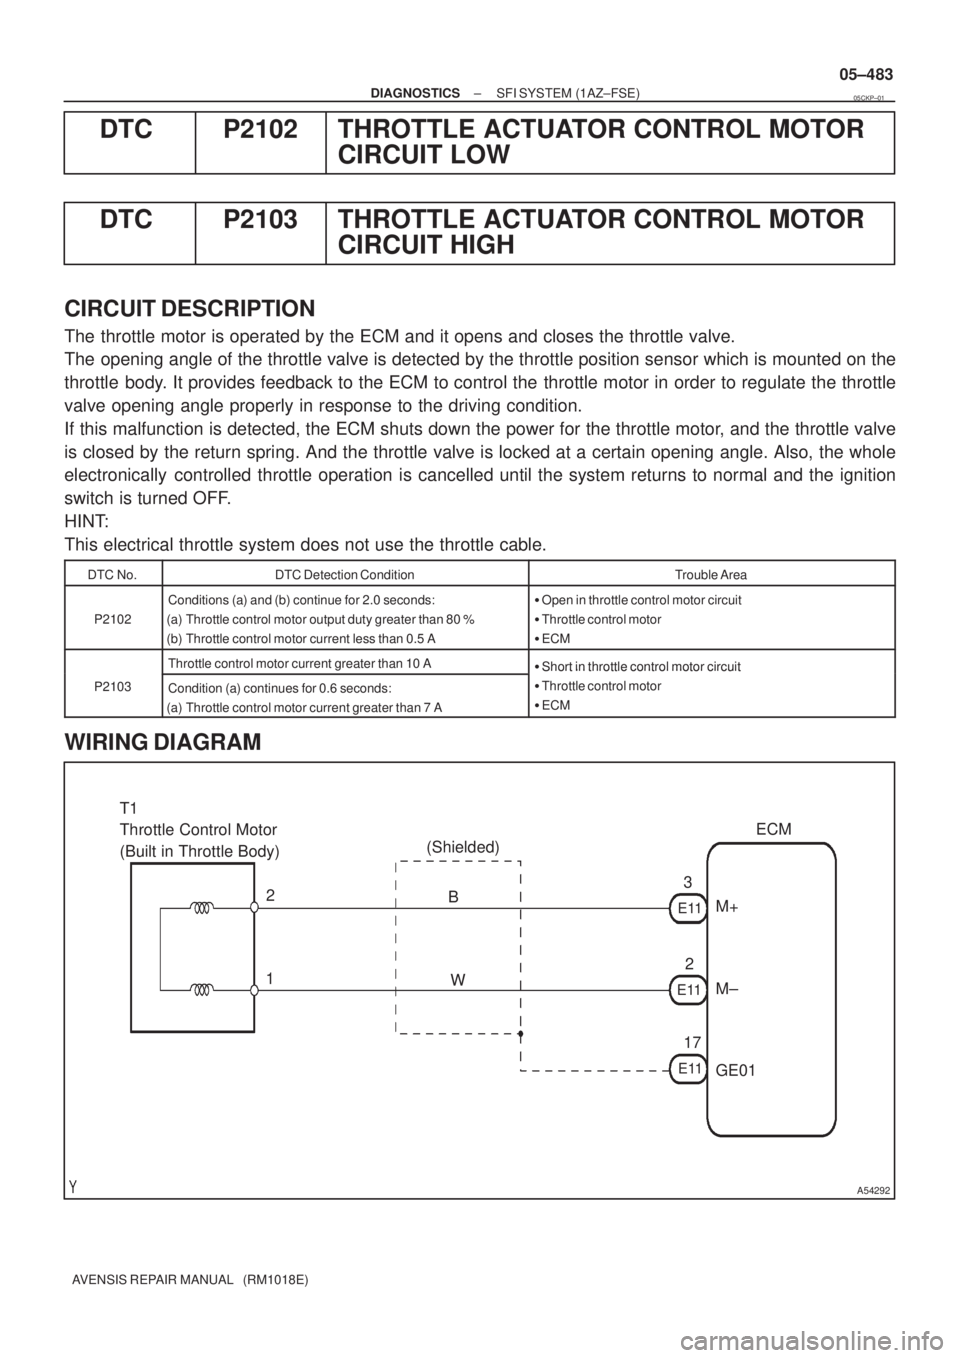 TOYOTA AVENSIS 2005  Service Repair Manual A54292
T1 
Throttle Control Motor 
(Built in Throttle Body)
2
1B
WECM
3
2
17M+
M±
E11
(Shielded)
E11
E11
GE01
± DIAGNOSTICSSFI SYSTEM (1AZ±FSE)
05±483
AVENSIS REPAIR MANUAL   (RM1018E)
DTC P2102 T